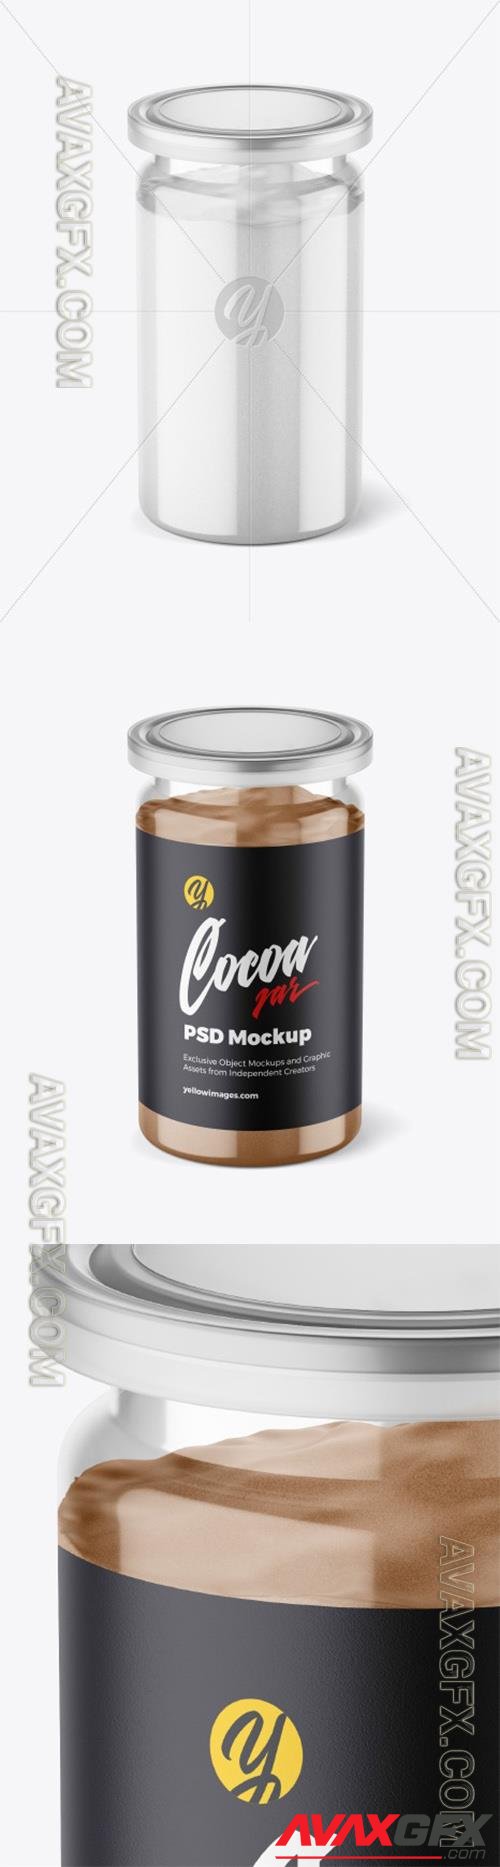 Jar with Cocoa Powder Mockup 46783 TIF